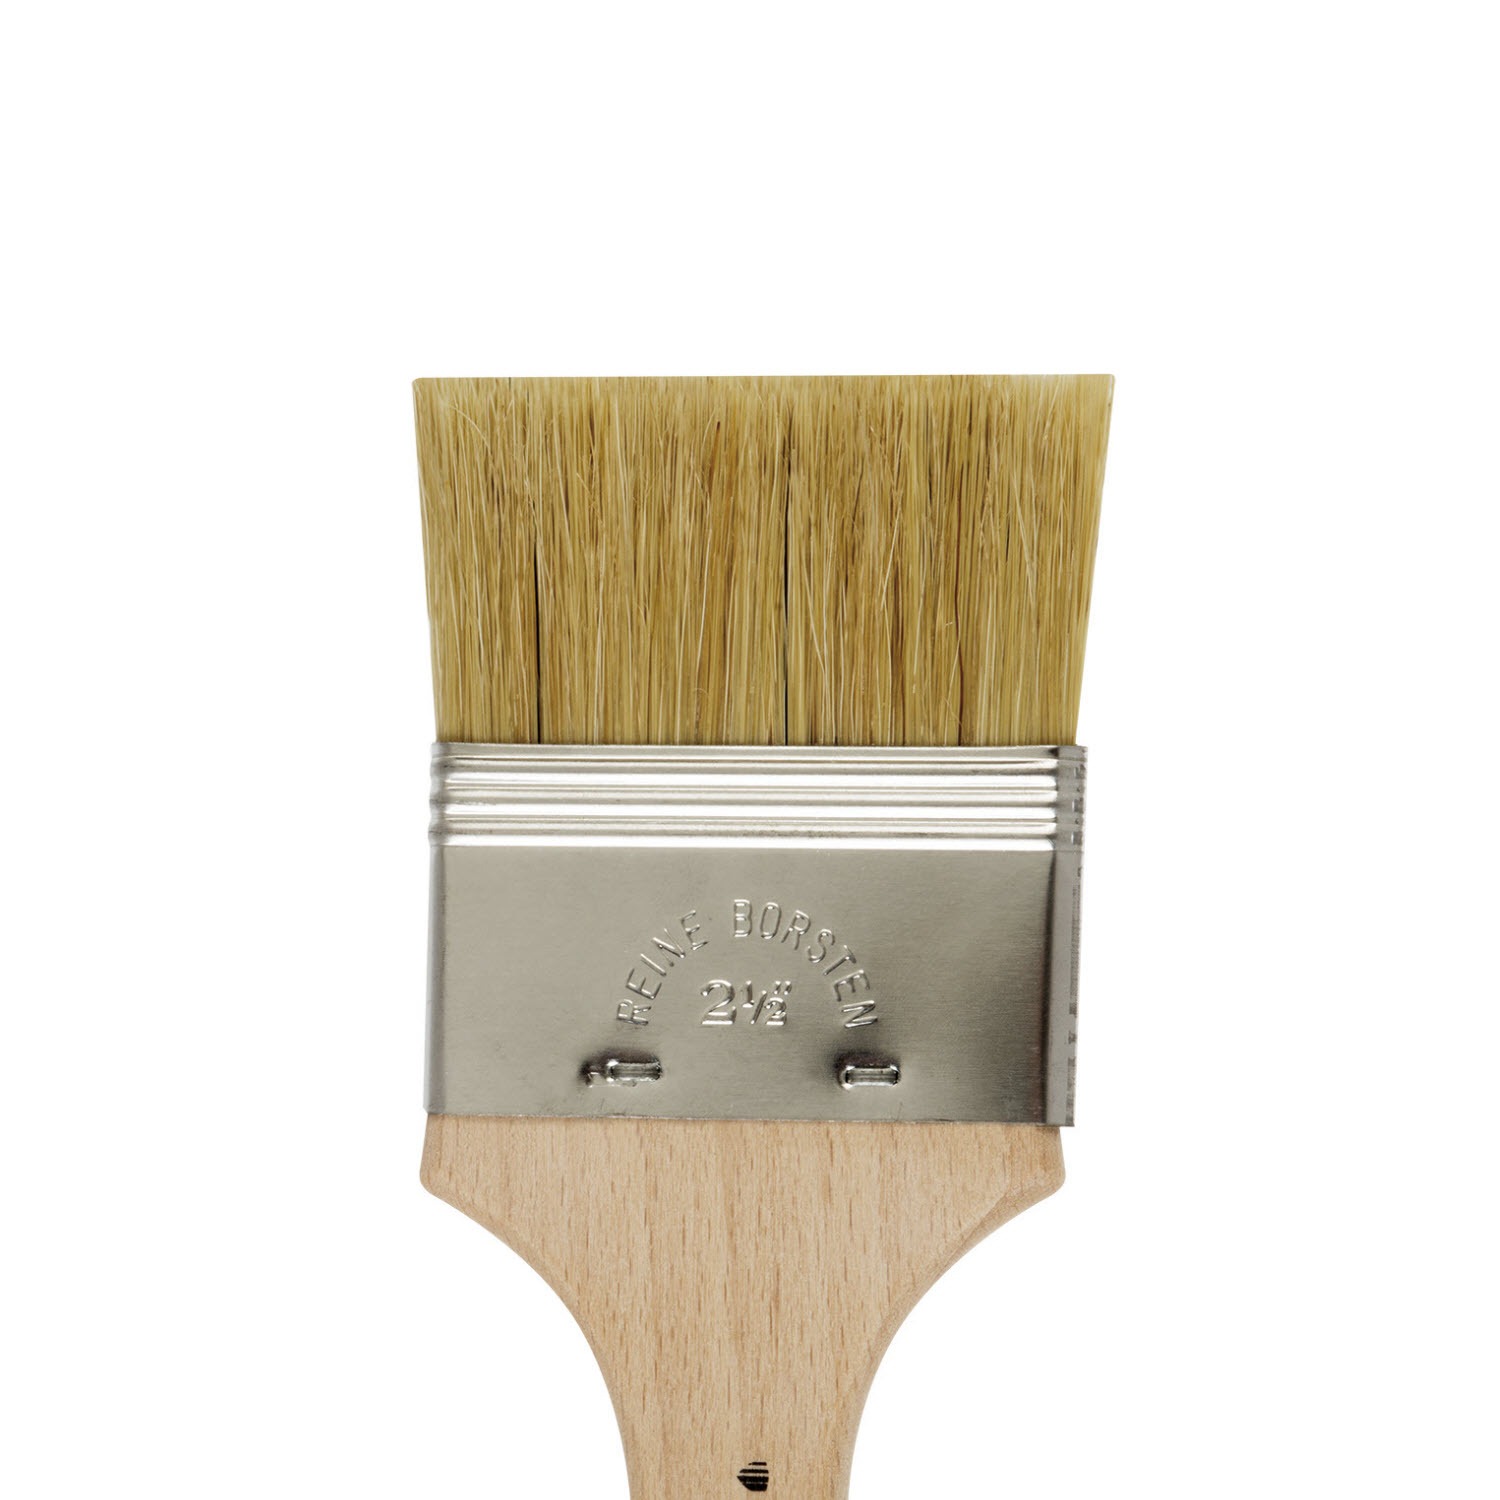 Oil & Acrylic Brush, flat - Bristle - lineo1911 - Shop